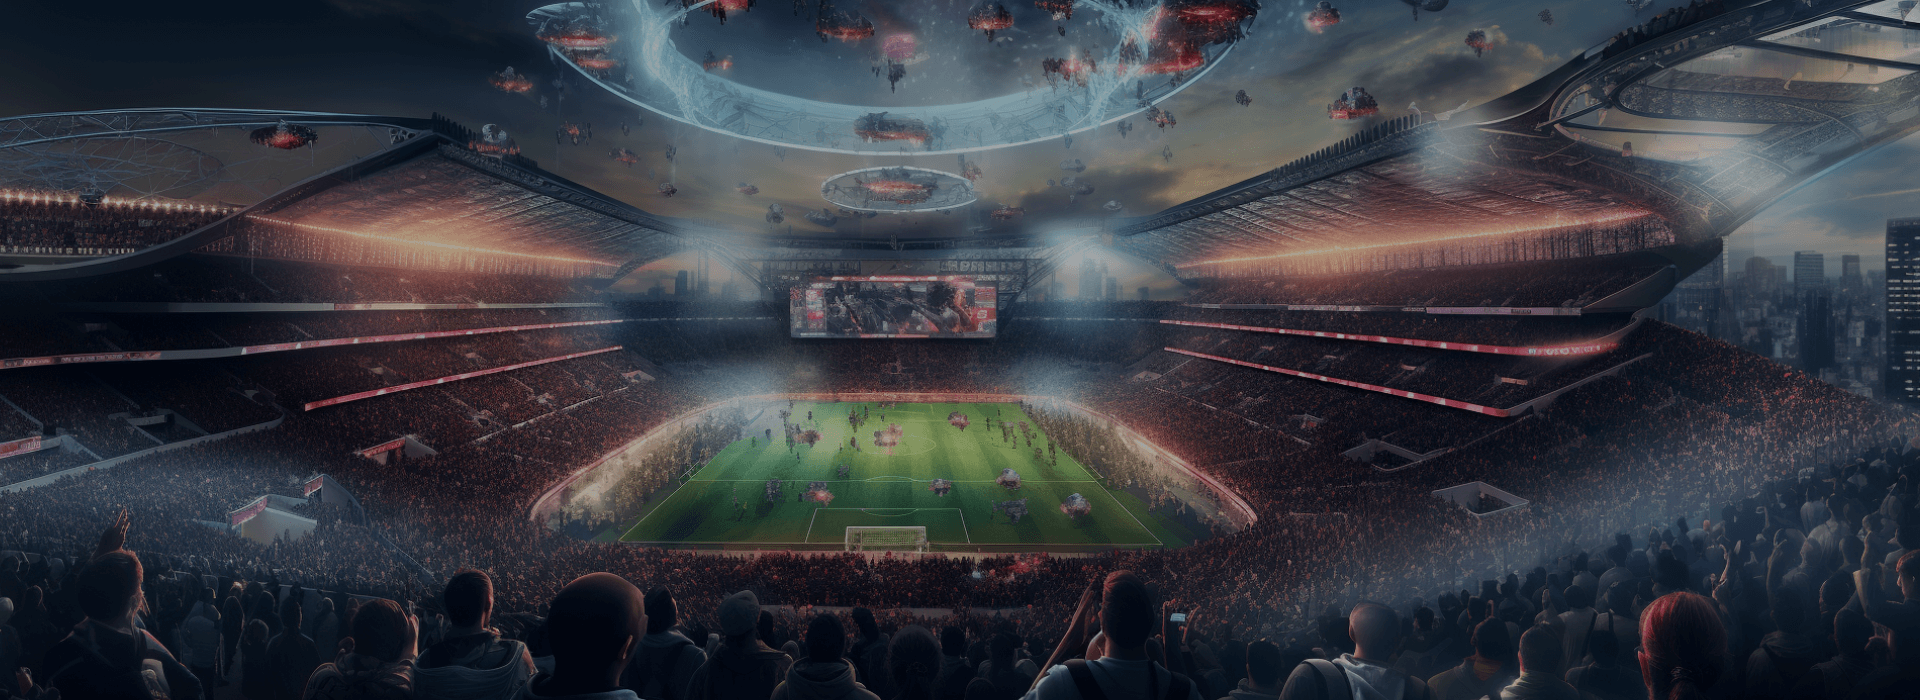 HYPE Sports Innovation Futuristic Stadium